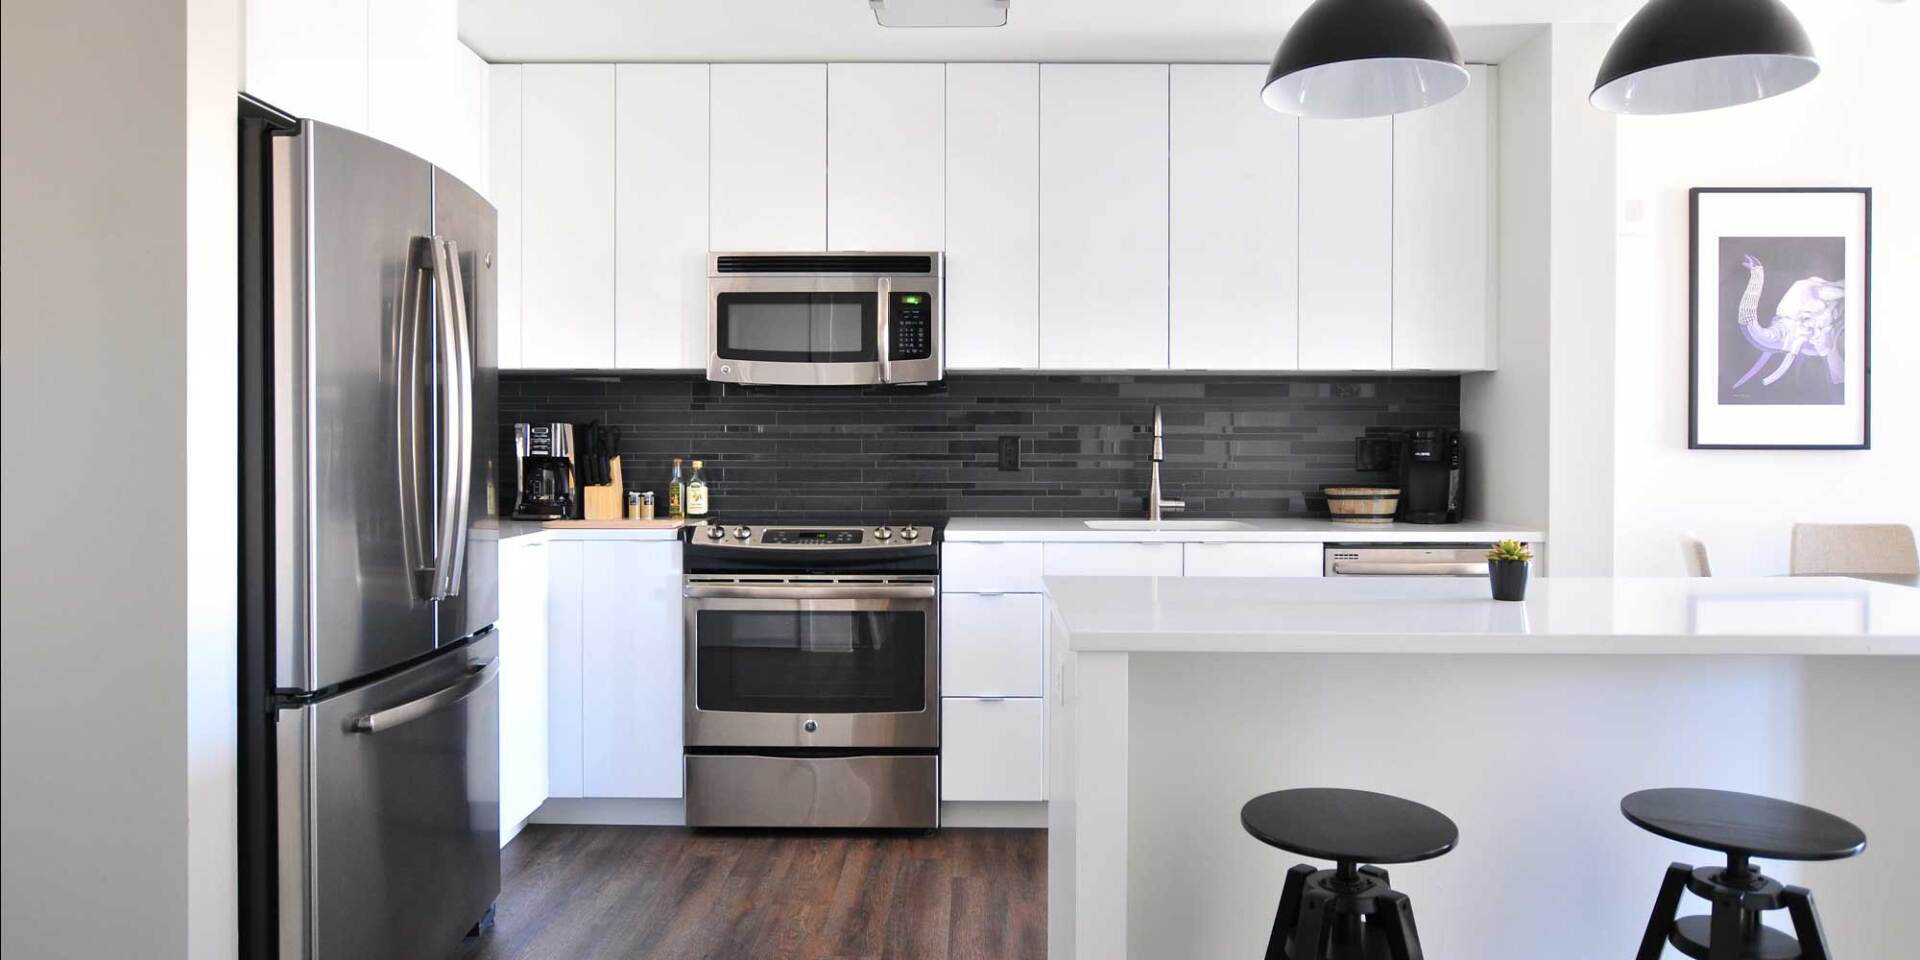 White kitchen with dark gray tile backsplash